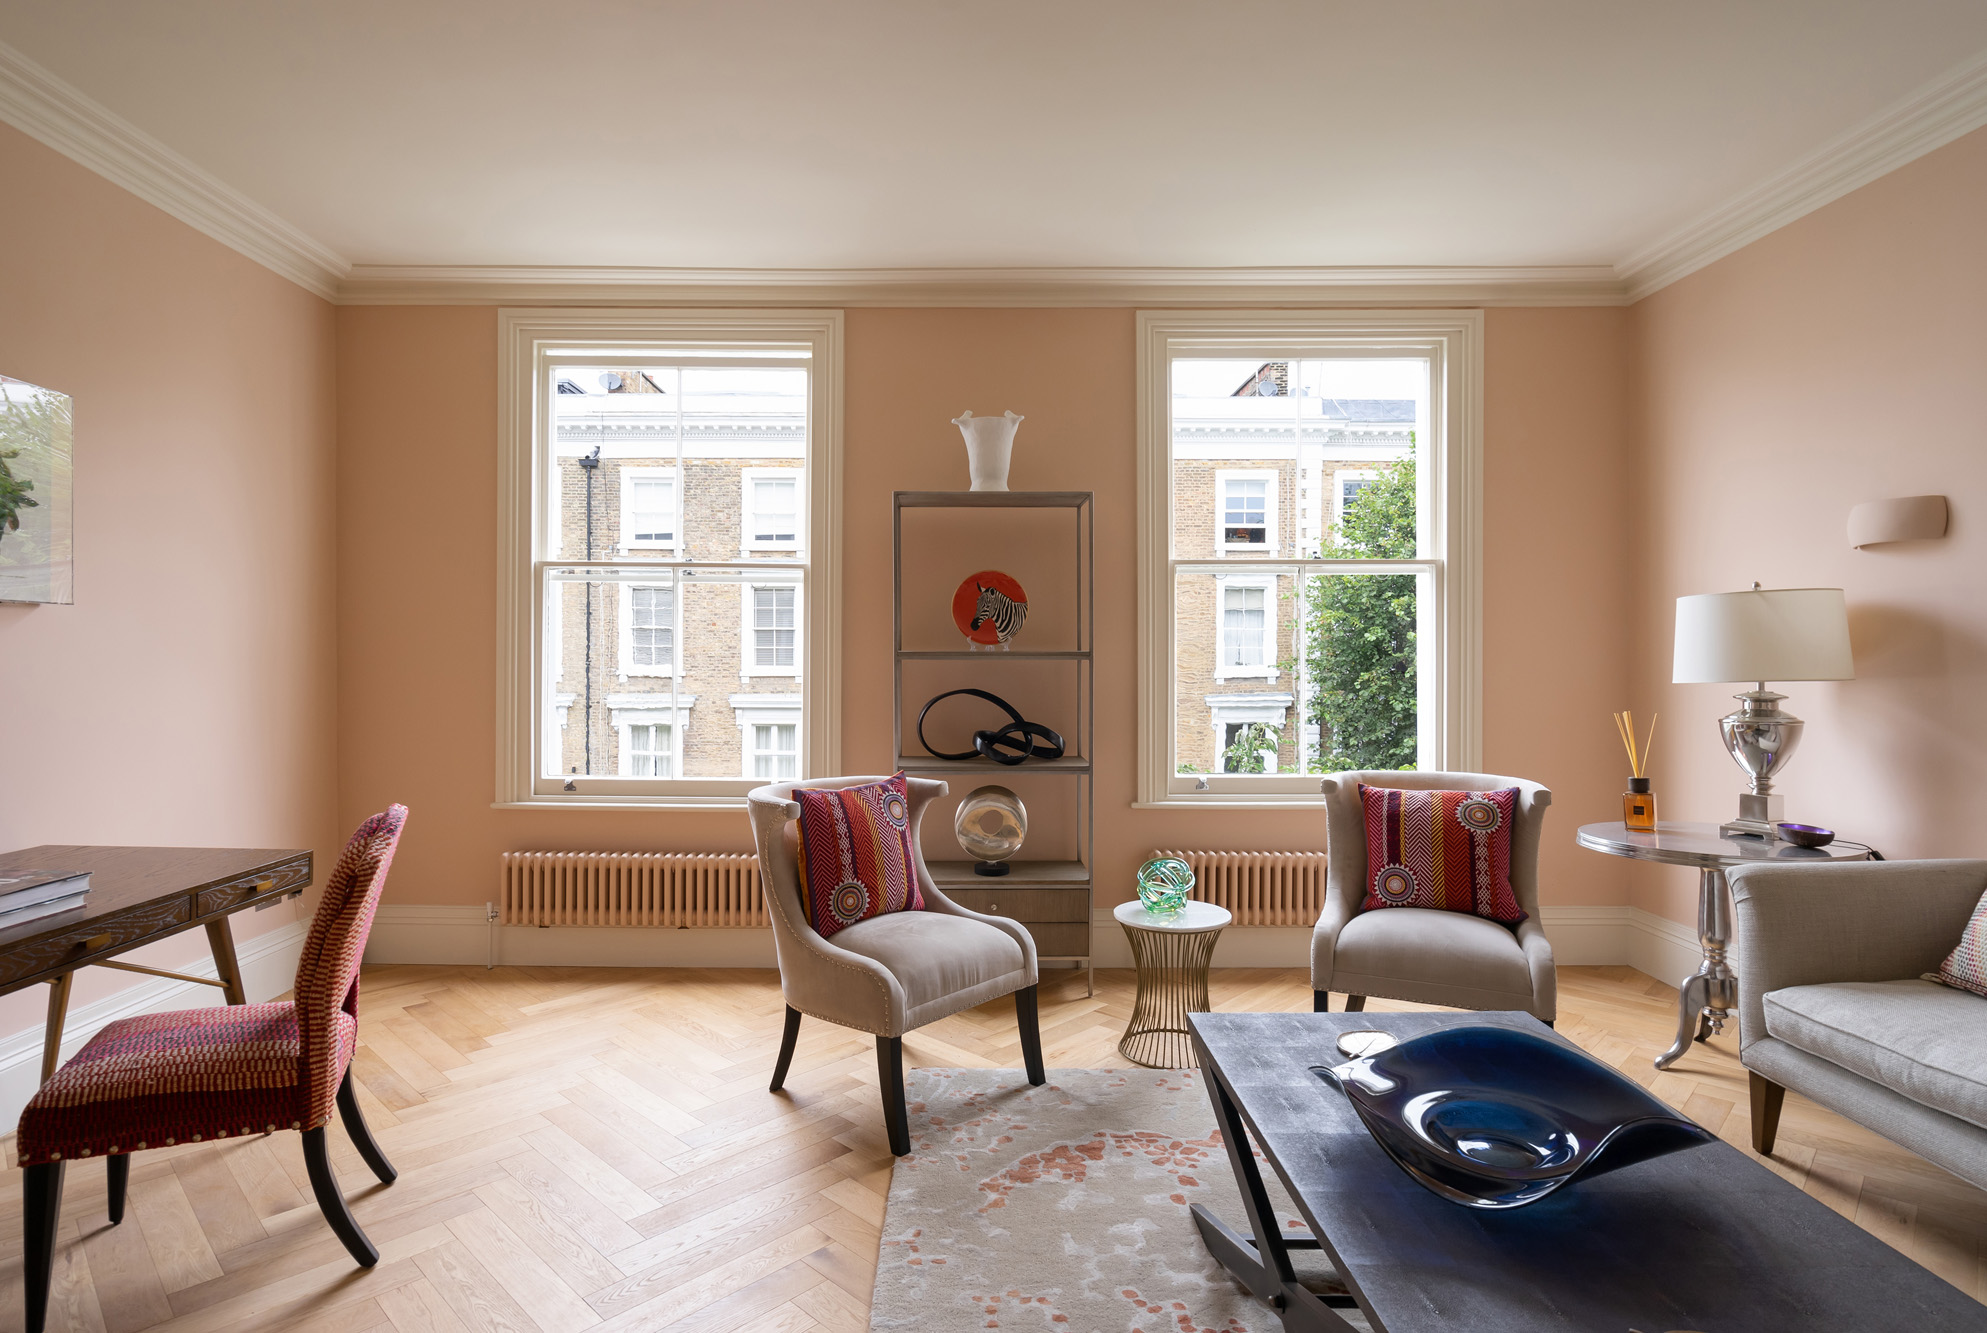 For Sale: Sunderland Terrace Notting Hill W11 elegant reception room with dual sash windows